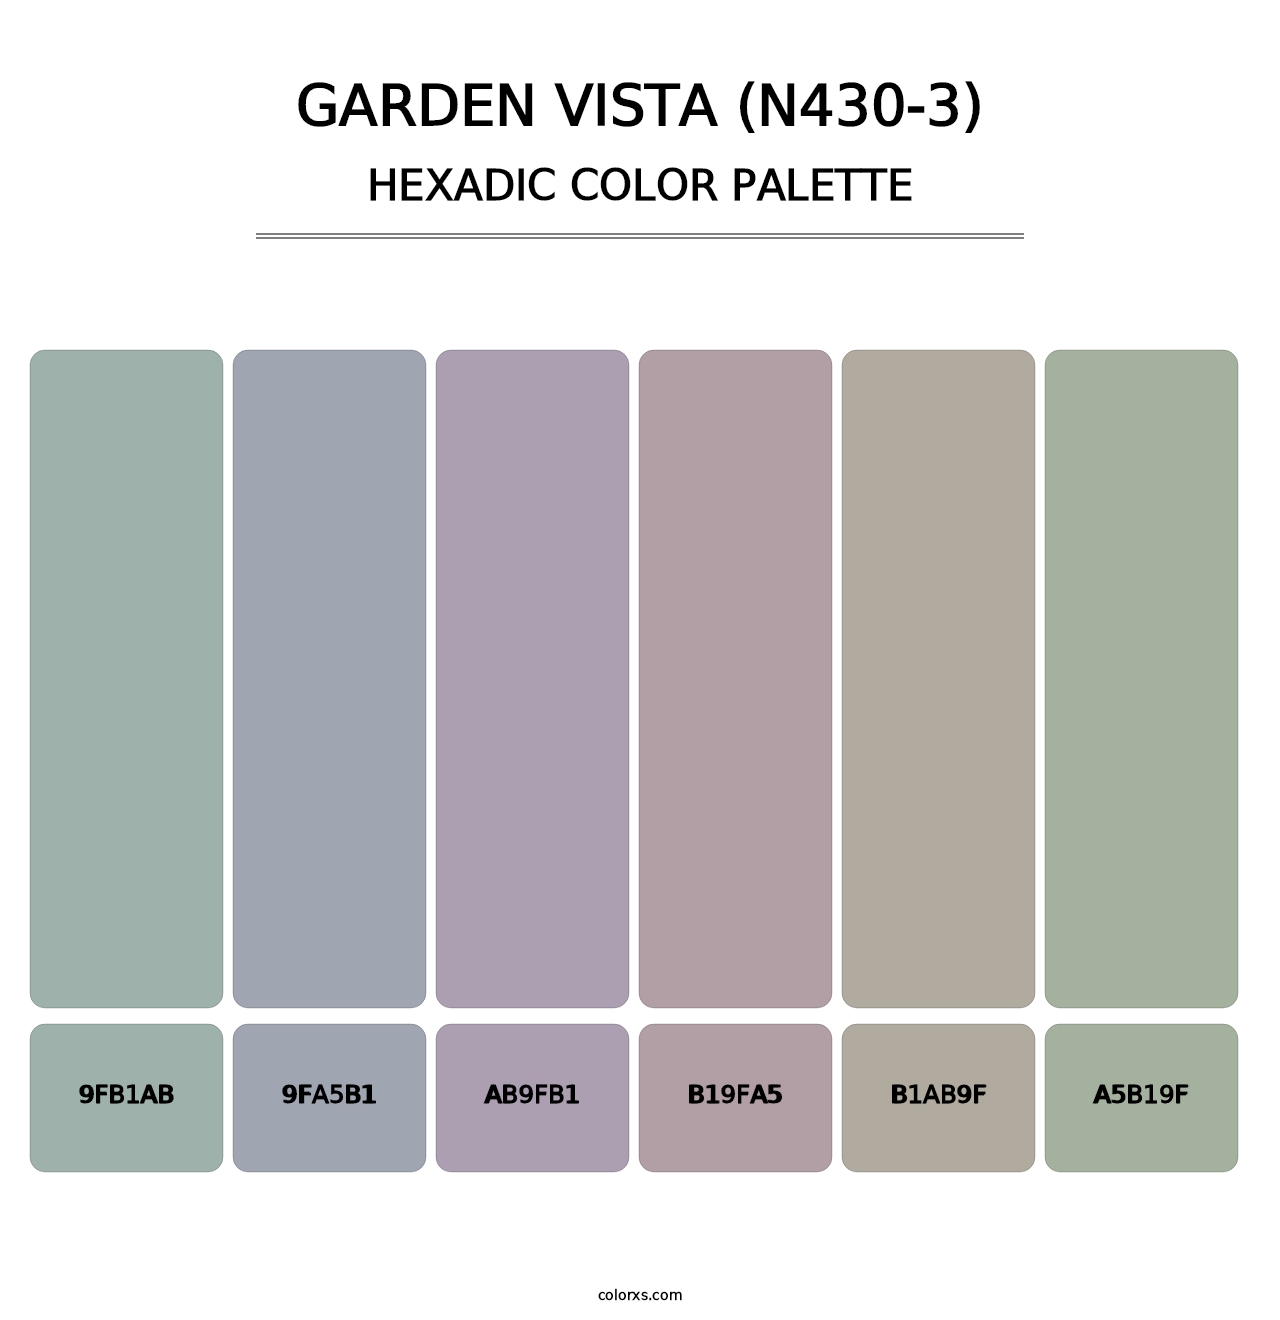 Garden Vista (N430-3) - Hexadic Color Palette